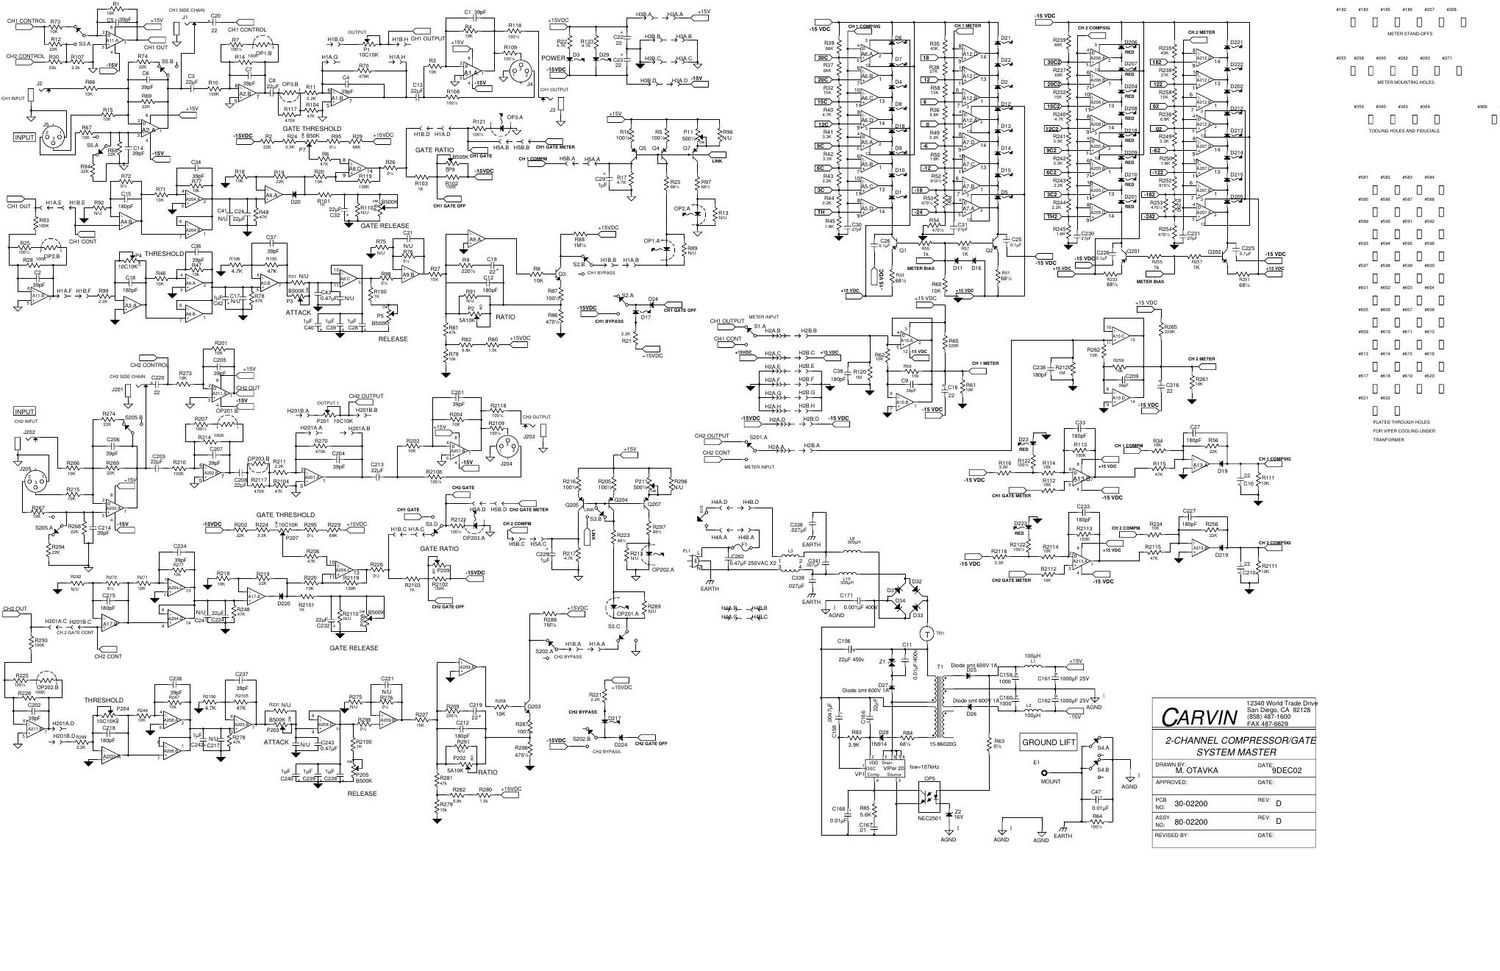 carvin cg 200 compressor schematic